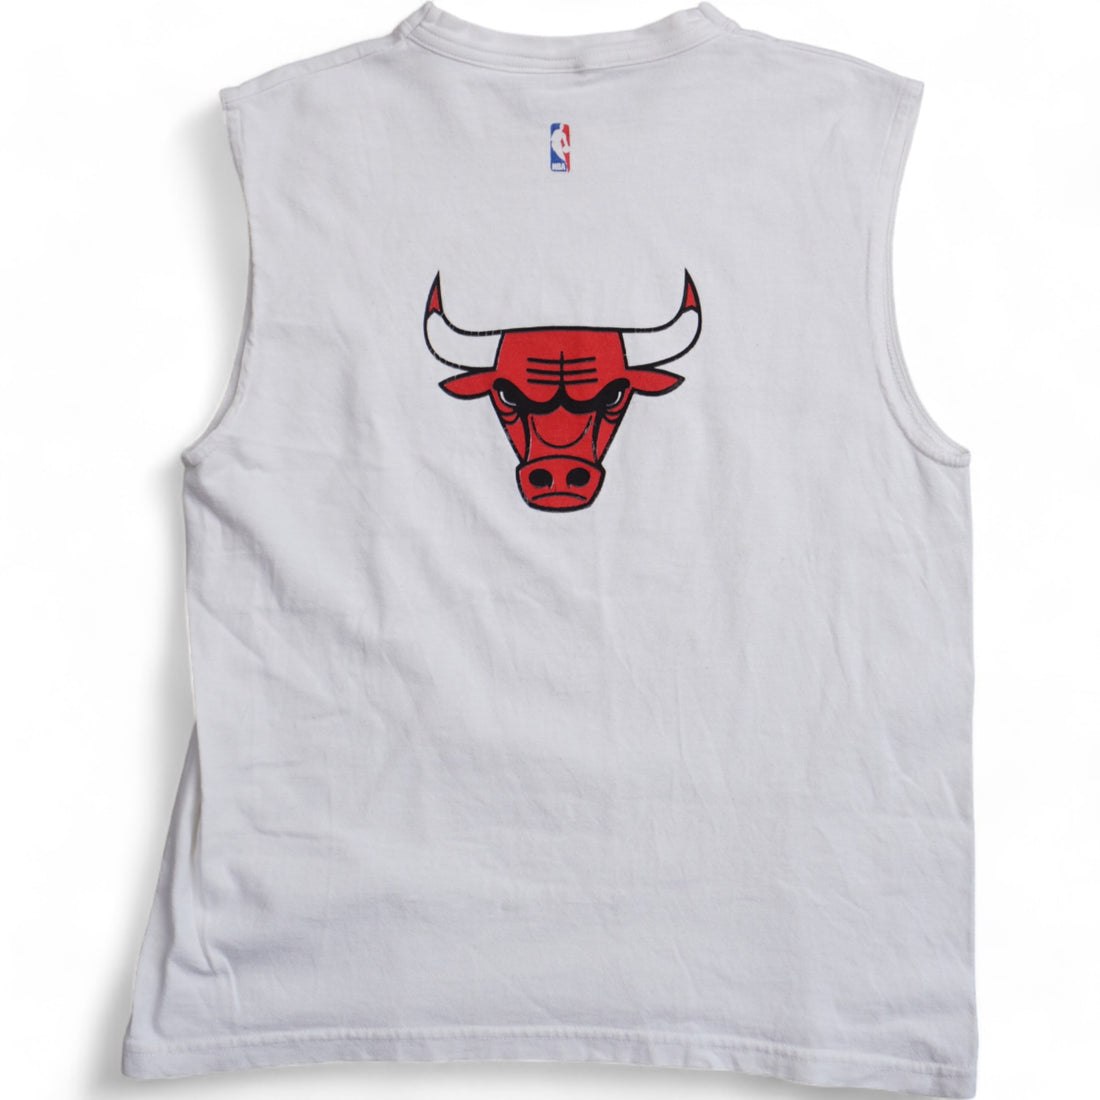 Nike Vintage Bulls T-Shirt (XS)